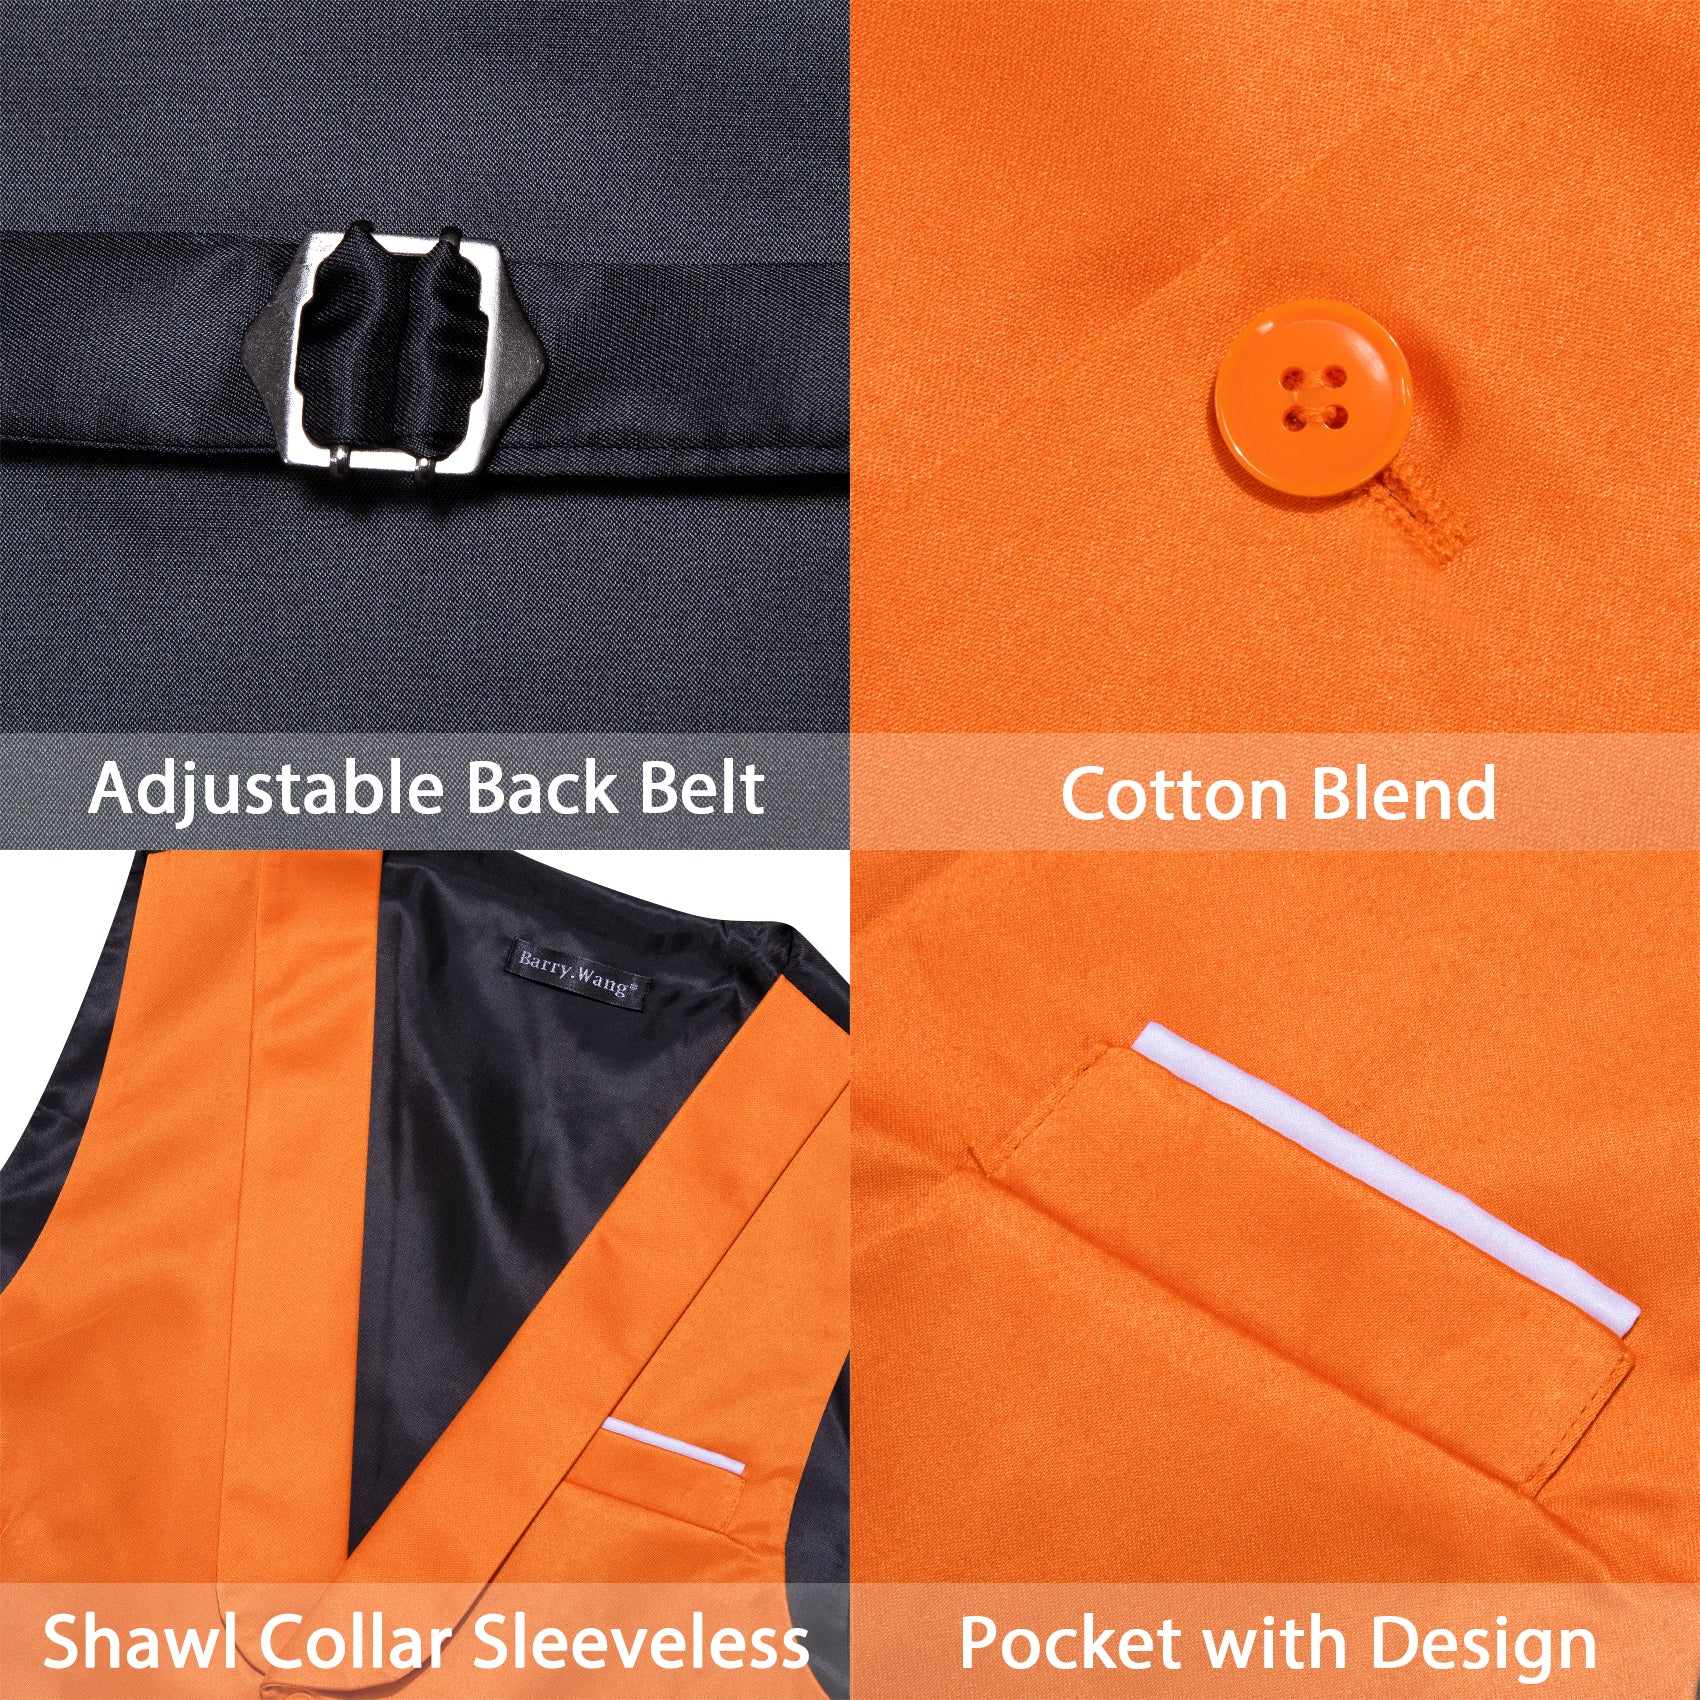 Barry.wang Novetly Orange Solid Vest Waistcoat Set